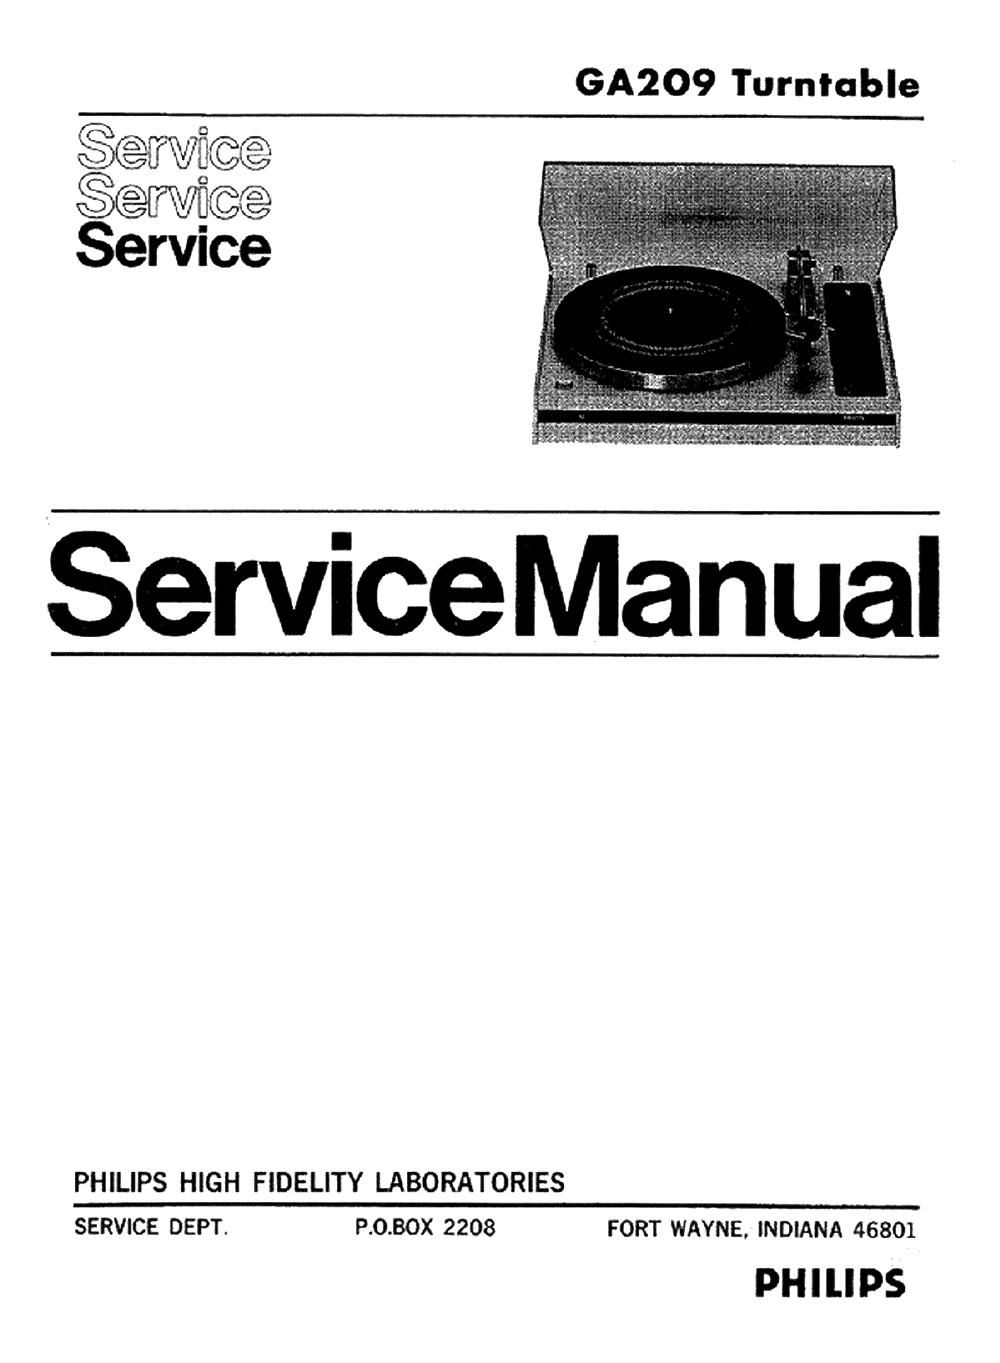 philips ga 209 service manual